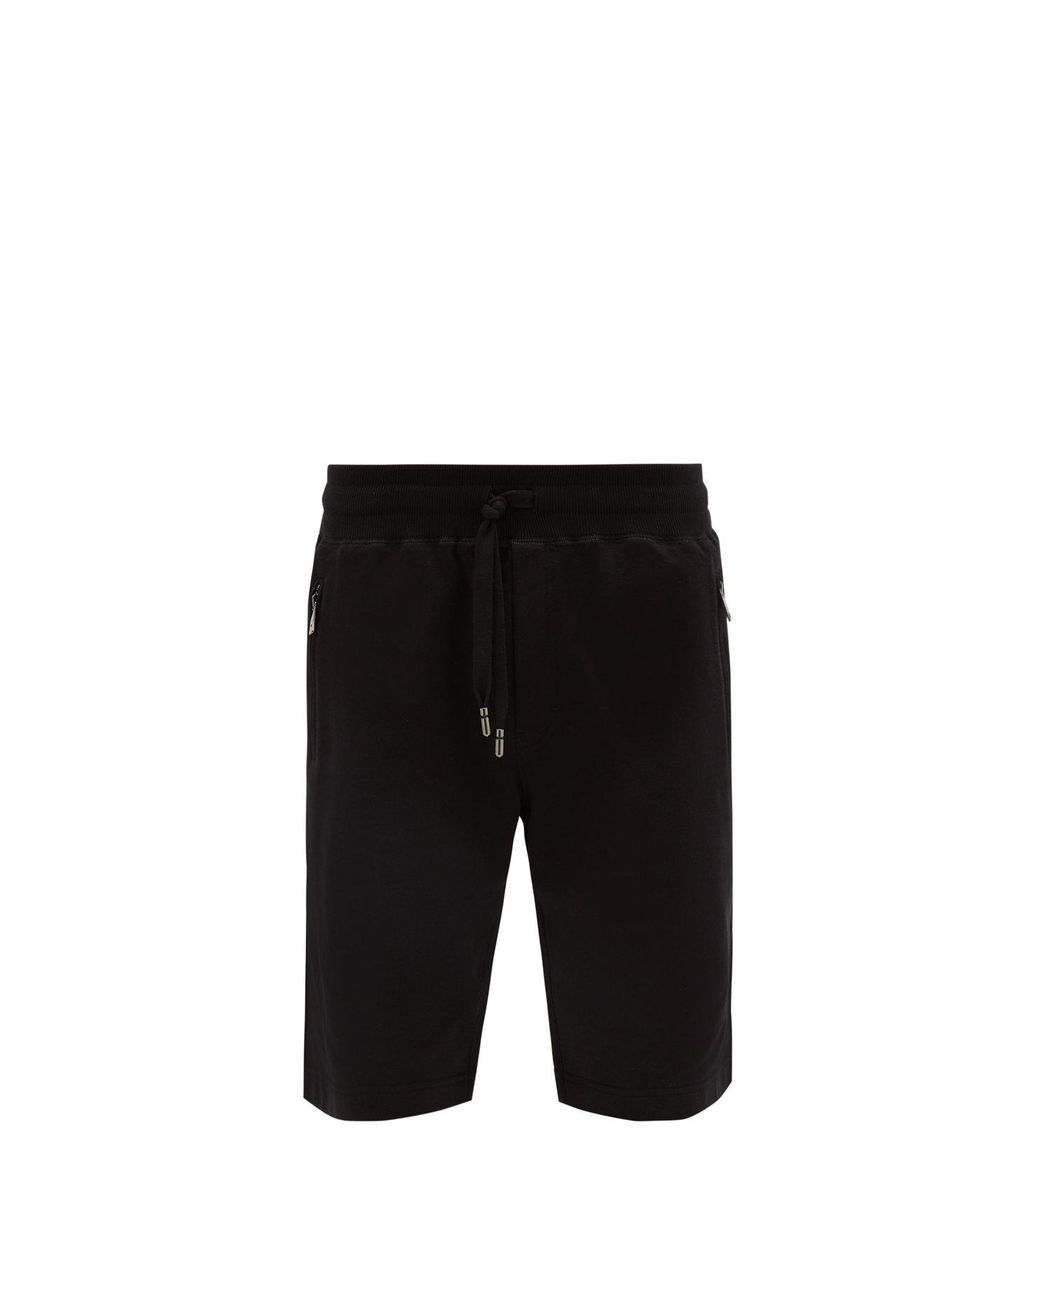 Dolce & Gabbana Logo Cotton Jersey Shorts in Black for Men - Lyst